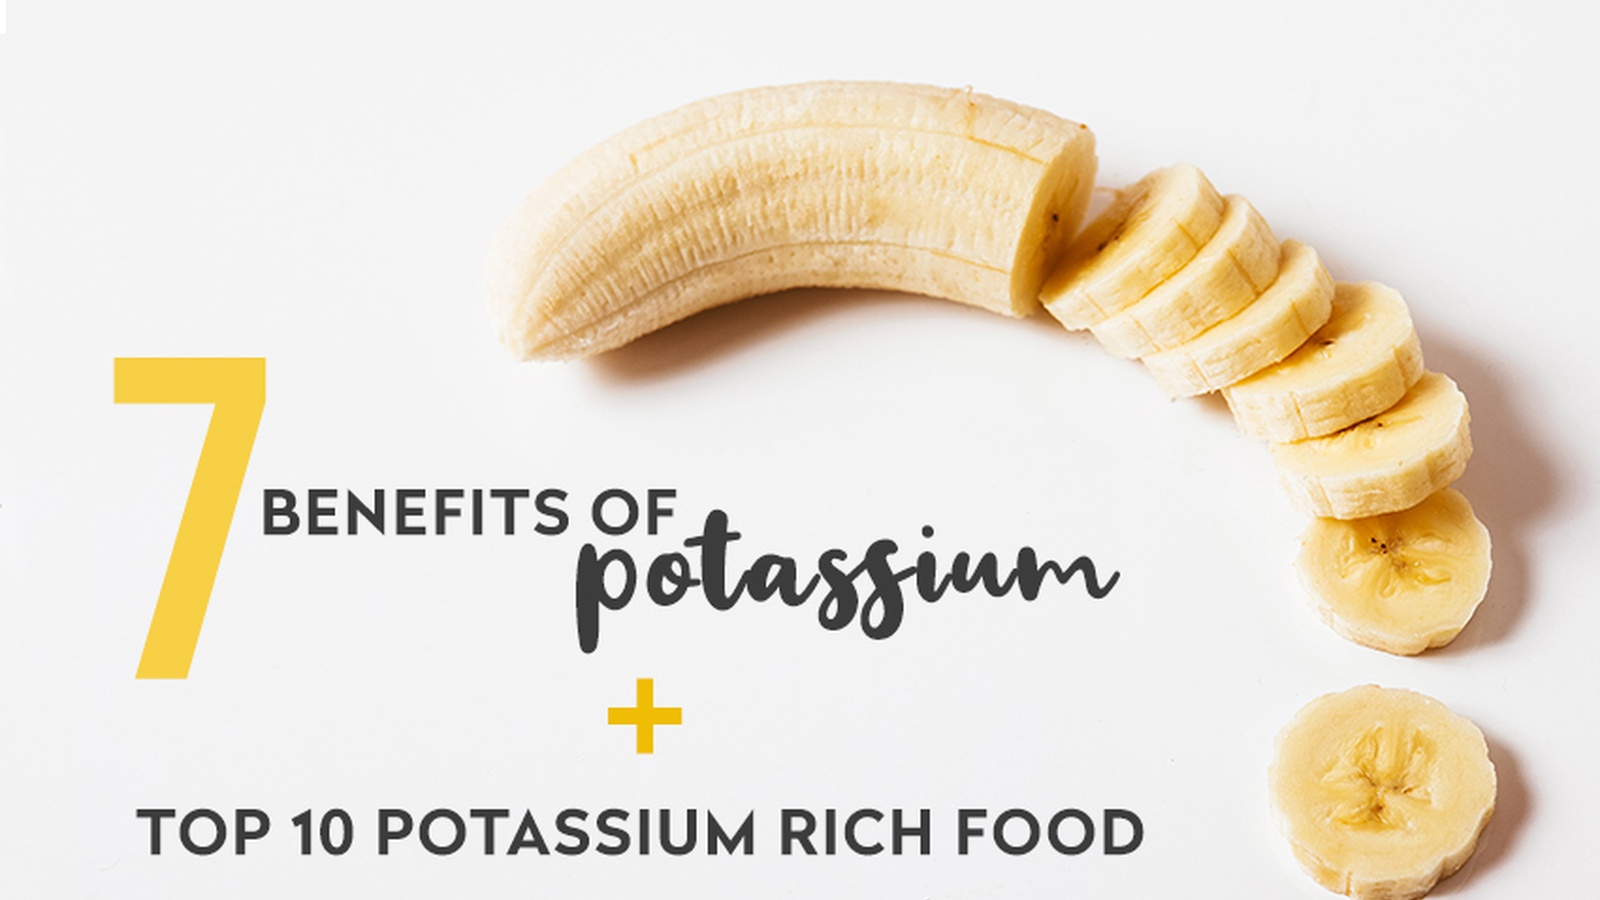 Health Benefits of Potassium + Top 10 Potassium-Rich Foods | FOOD MATTERS®